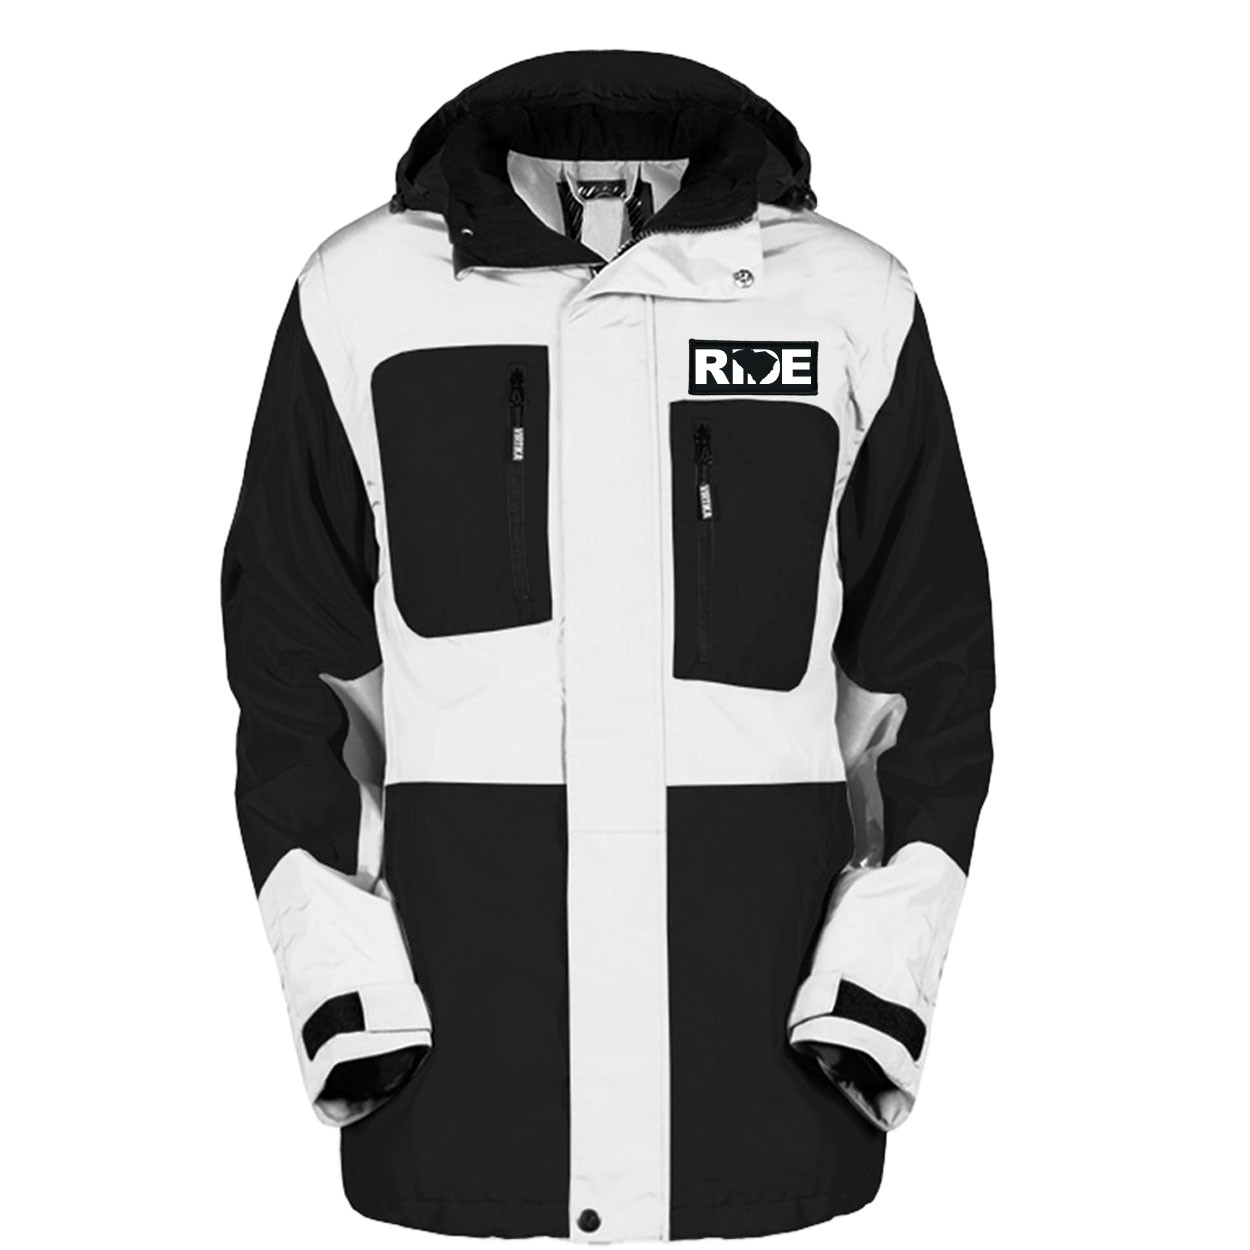 Ride South Carolina Classic Woven Patch Pro Snowboard Jacket (Black/White)